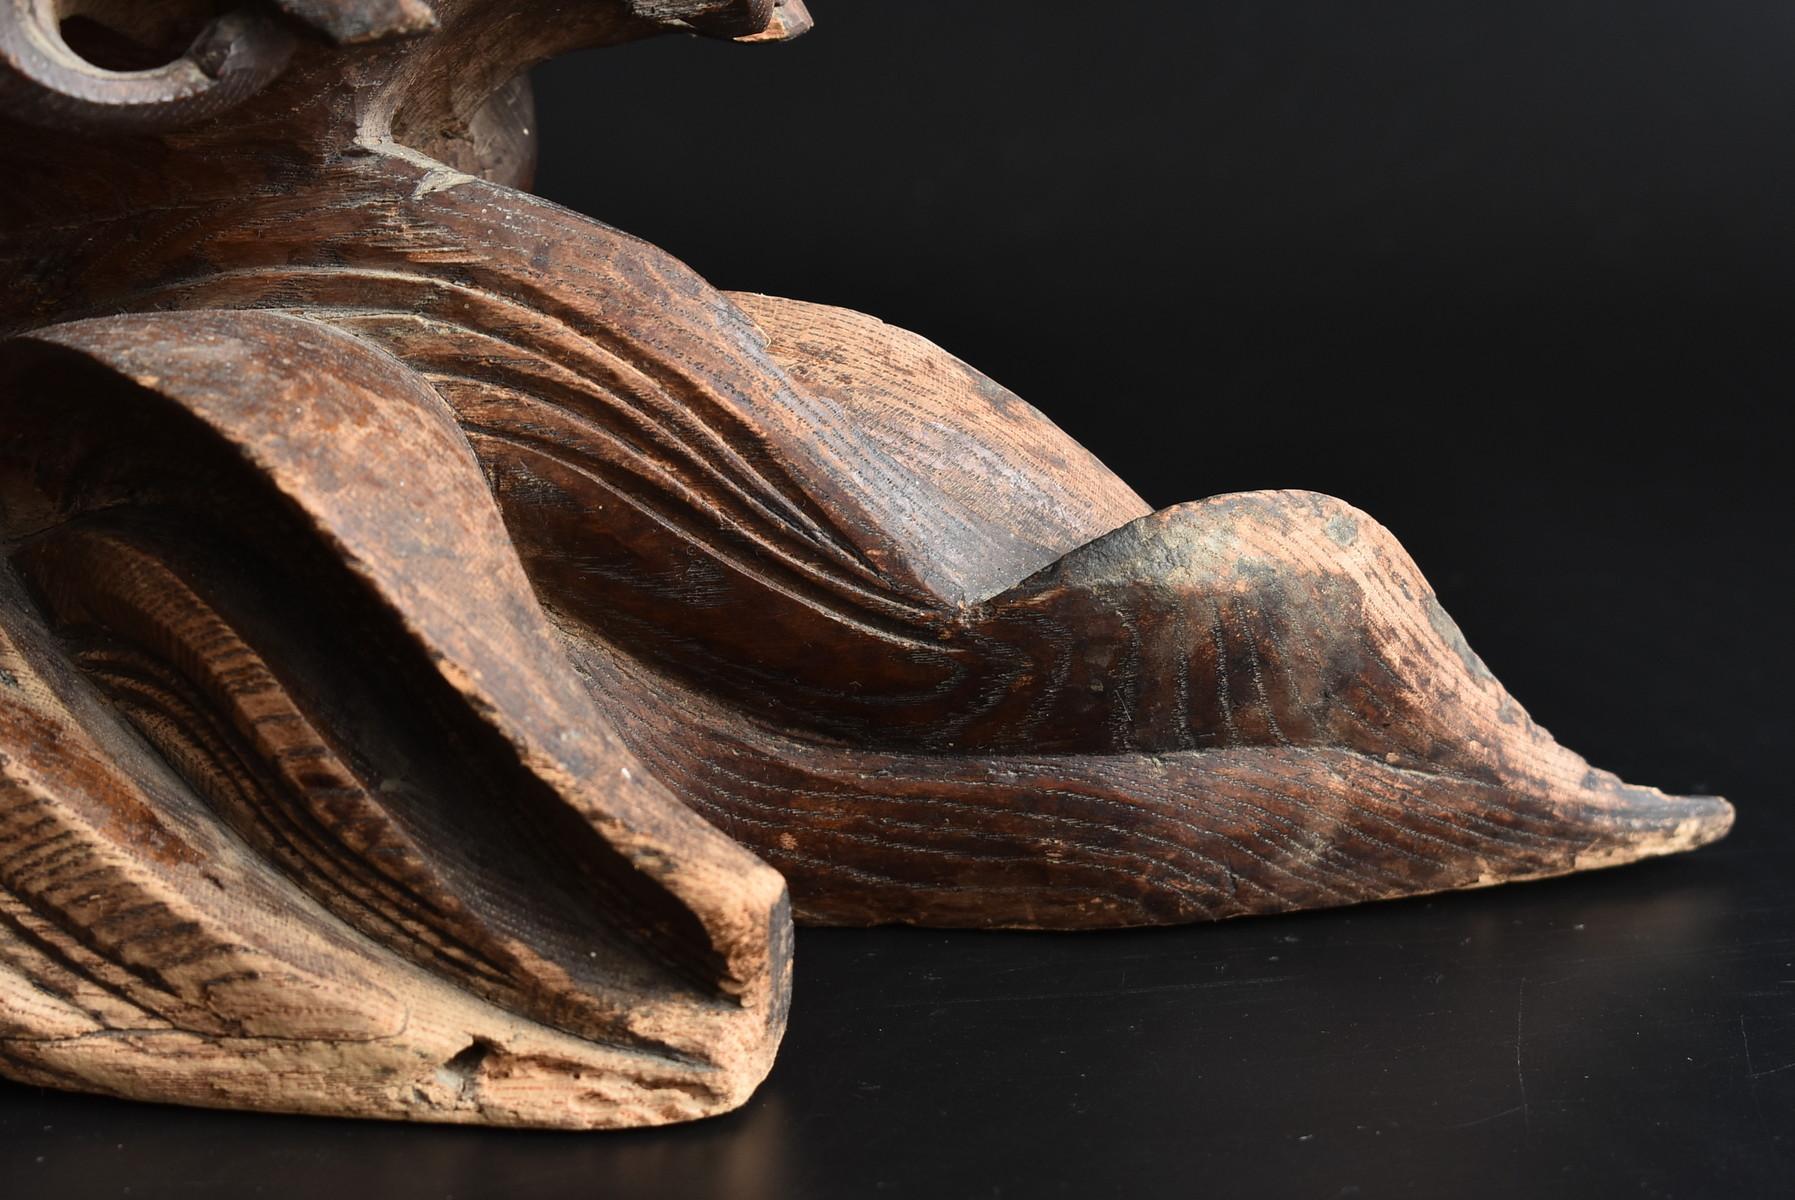 Japanese Antique Wood Carving Wavy Figurine / Incense Burner / Decoration Stand 4